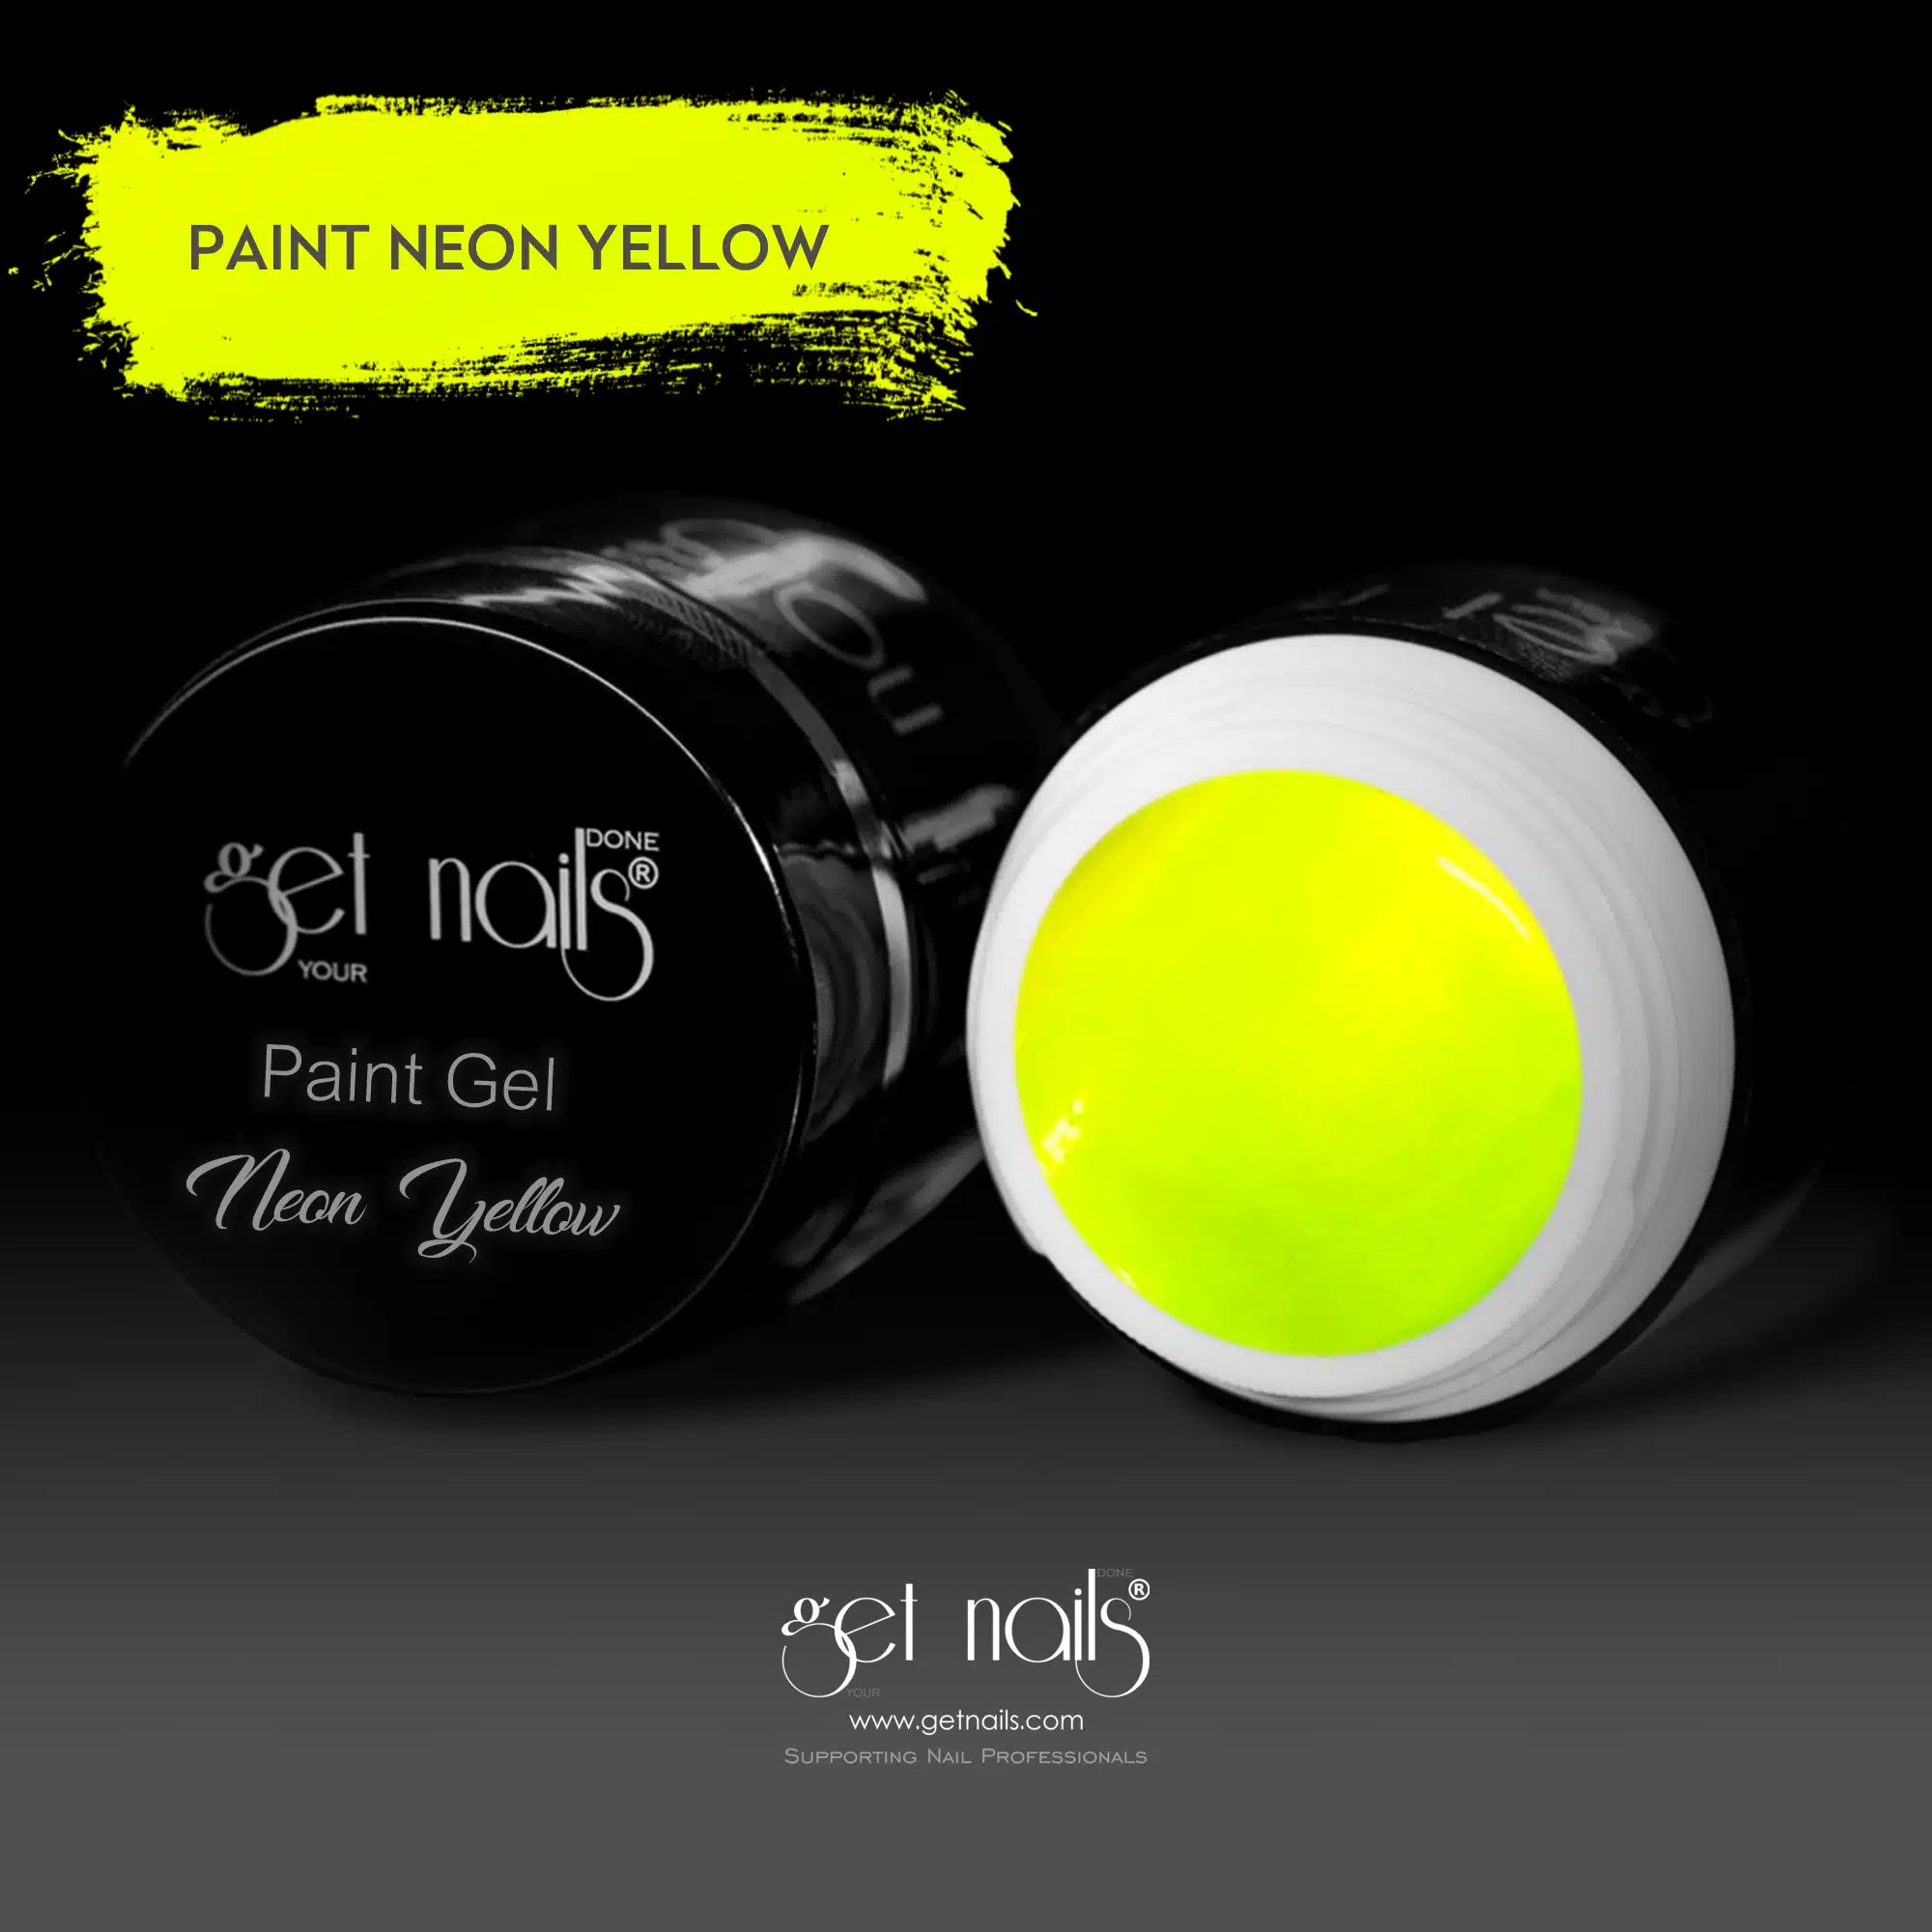 Get Nails Austria - Paint Gel Neon Yellow 5g